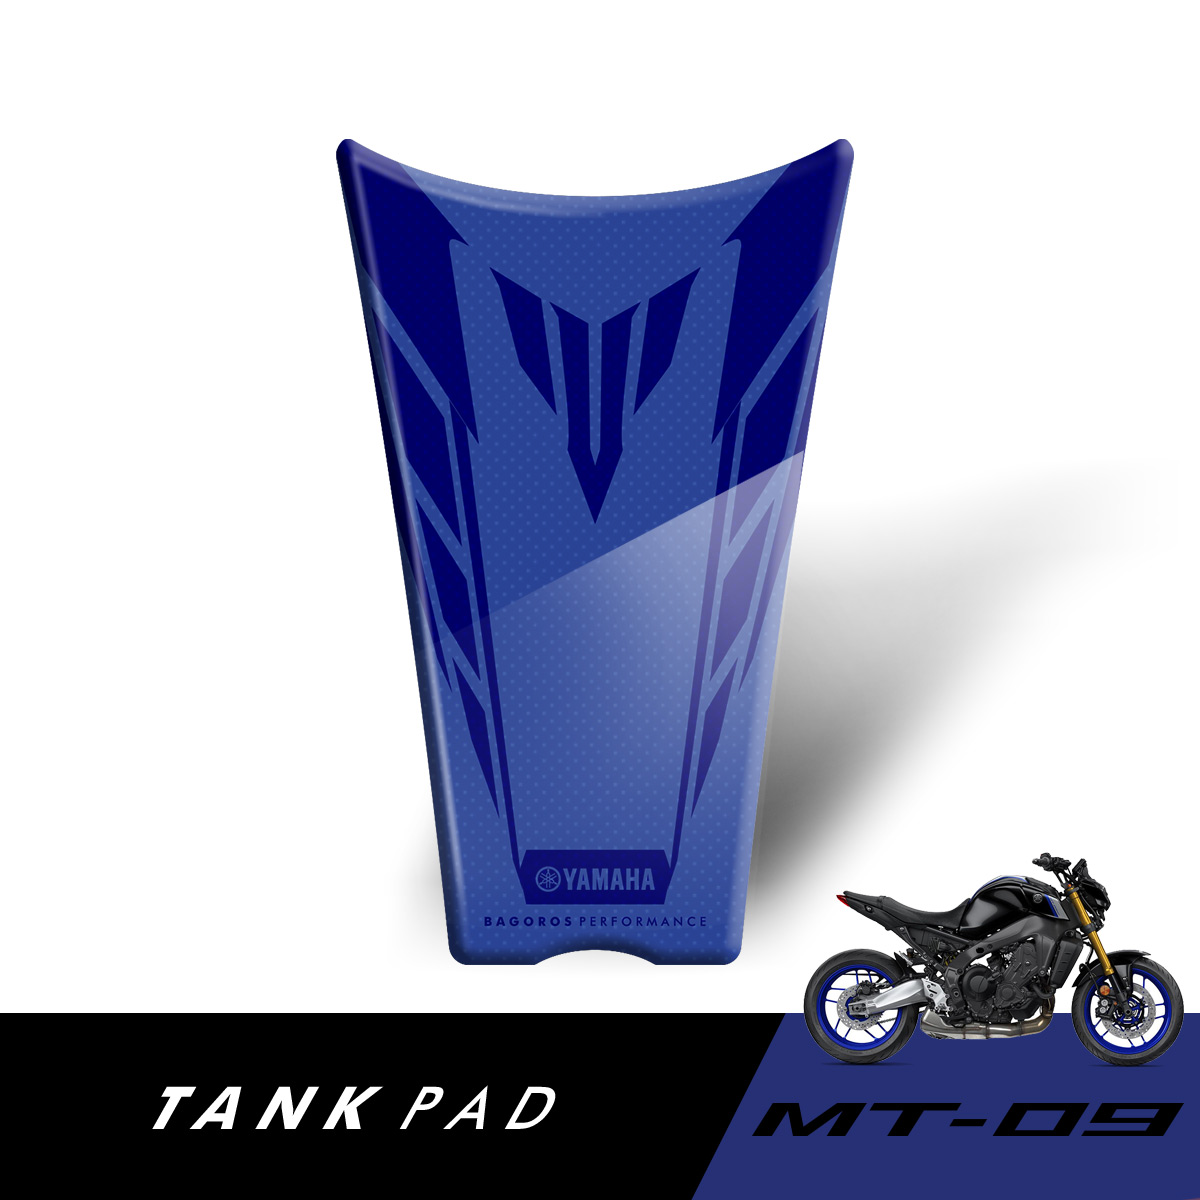 Tank pad Yamaha MT 09